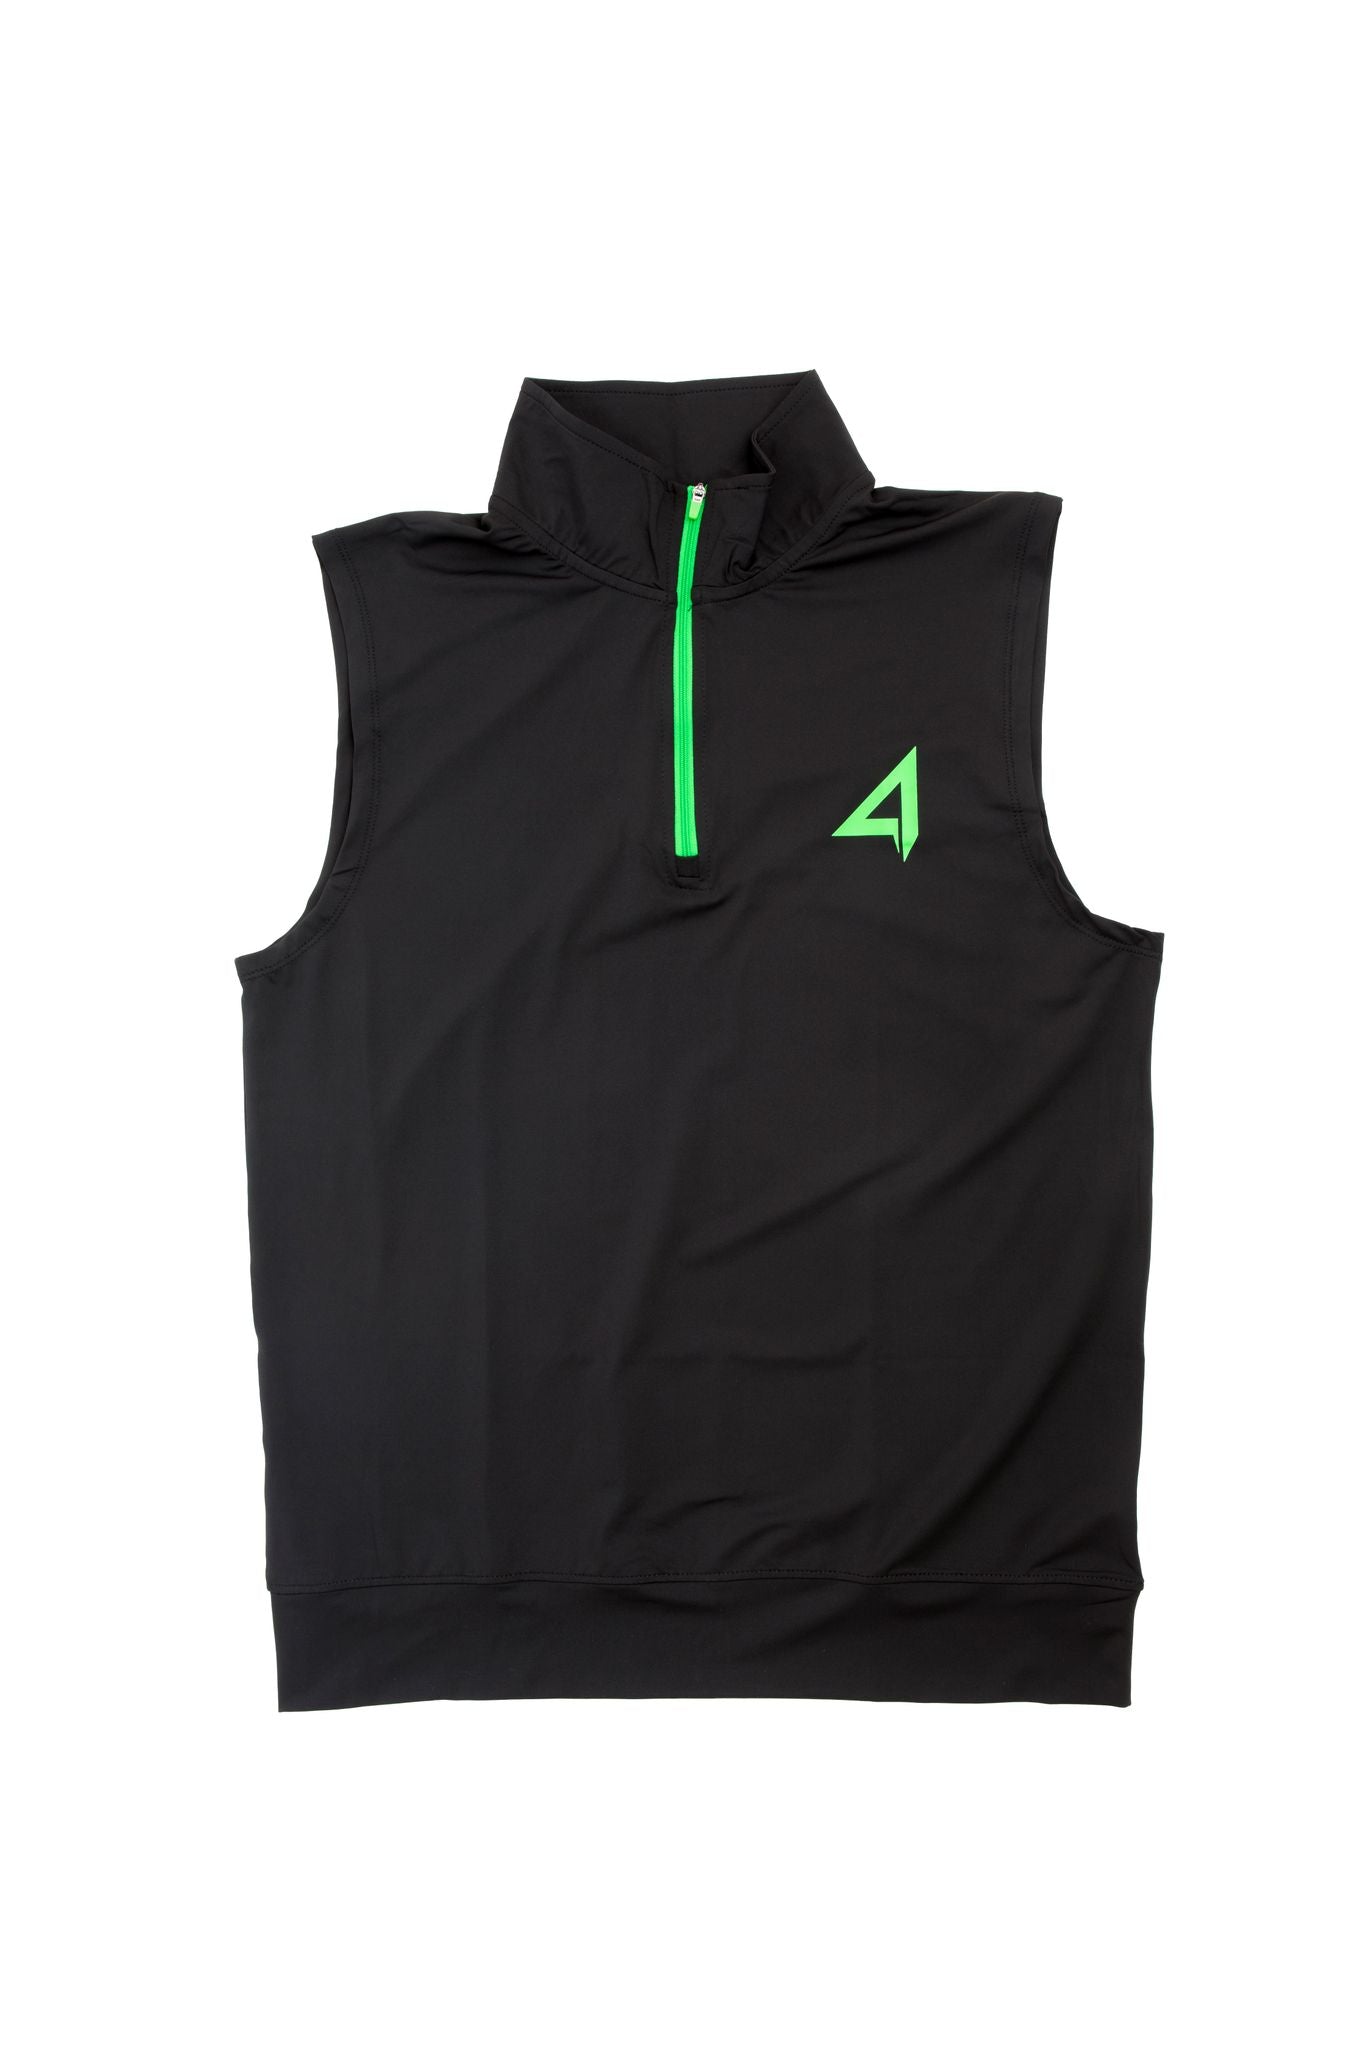 4ORE Golf Vest [Black w/ Green Zipper] - 4ORE NUTRITION 4ORE Golf Vest [Black w/ Green Zipper] Small Apparel & Accessories (7775843221759)